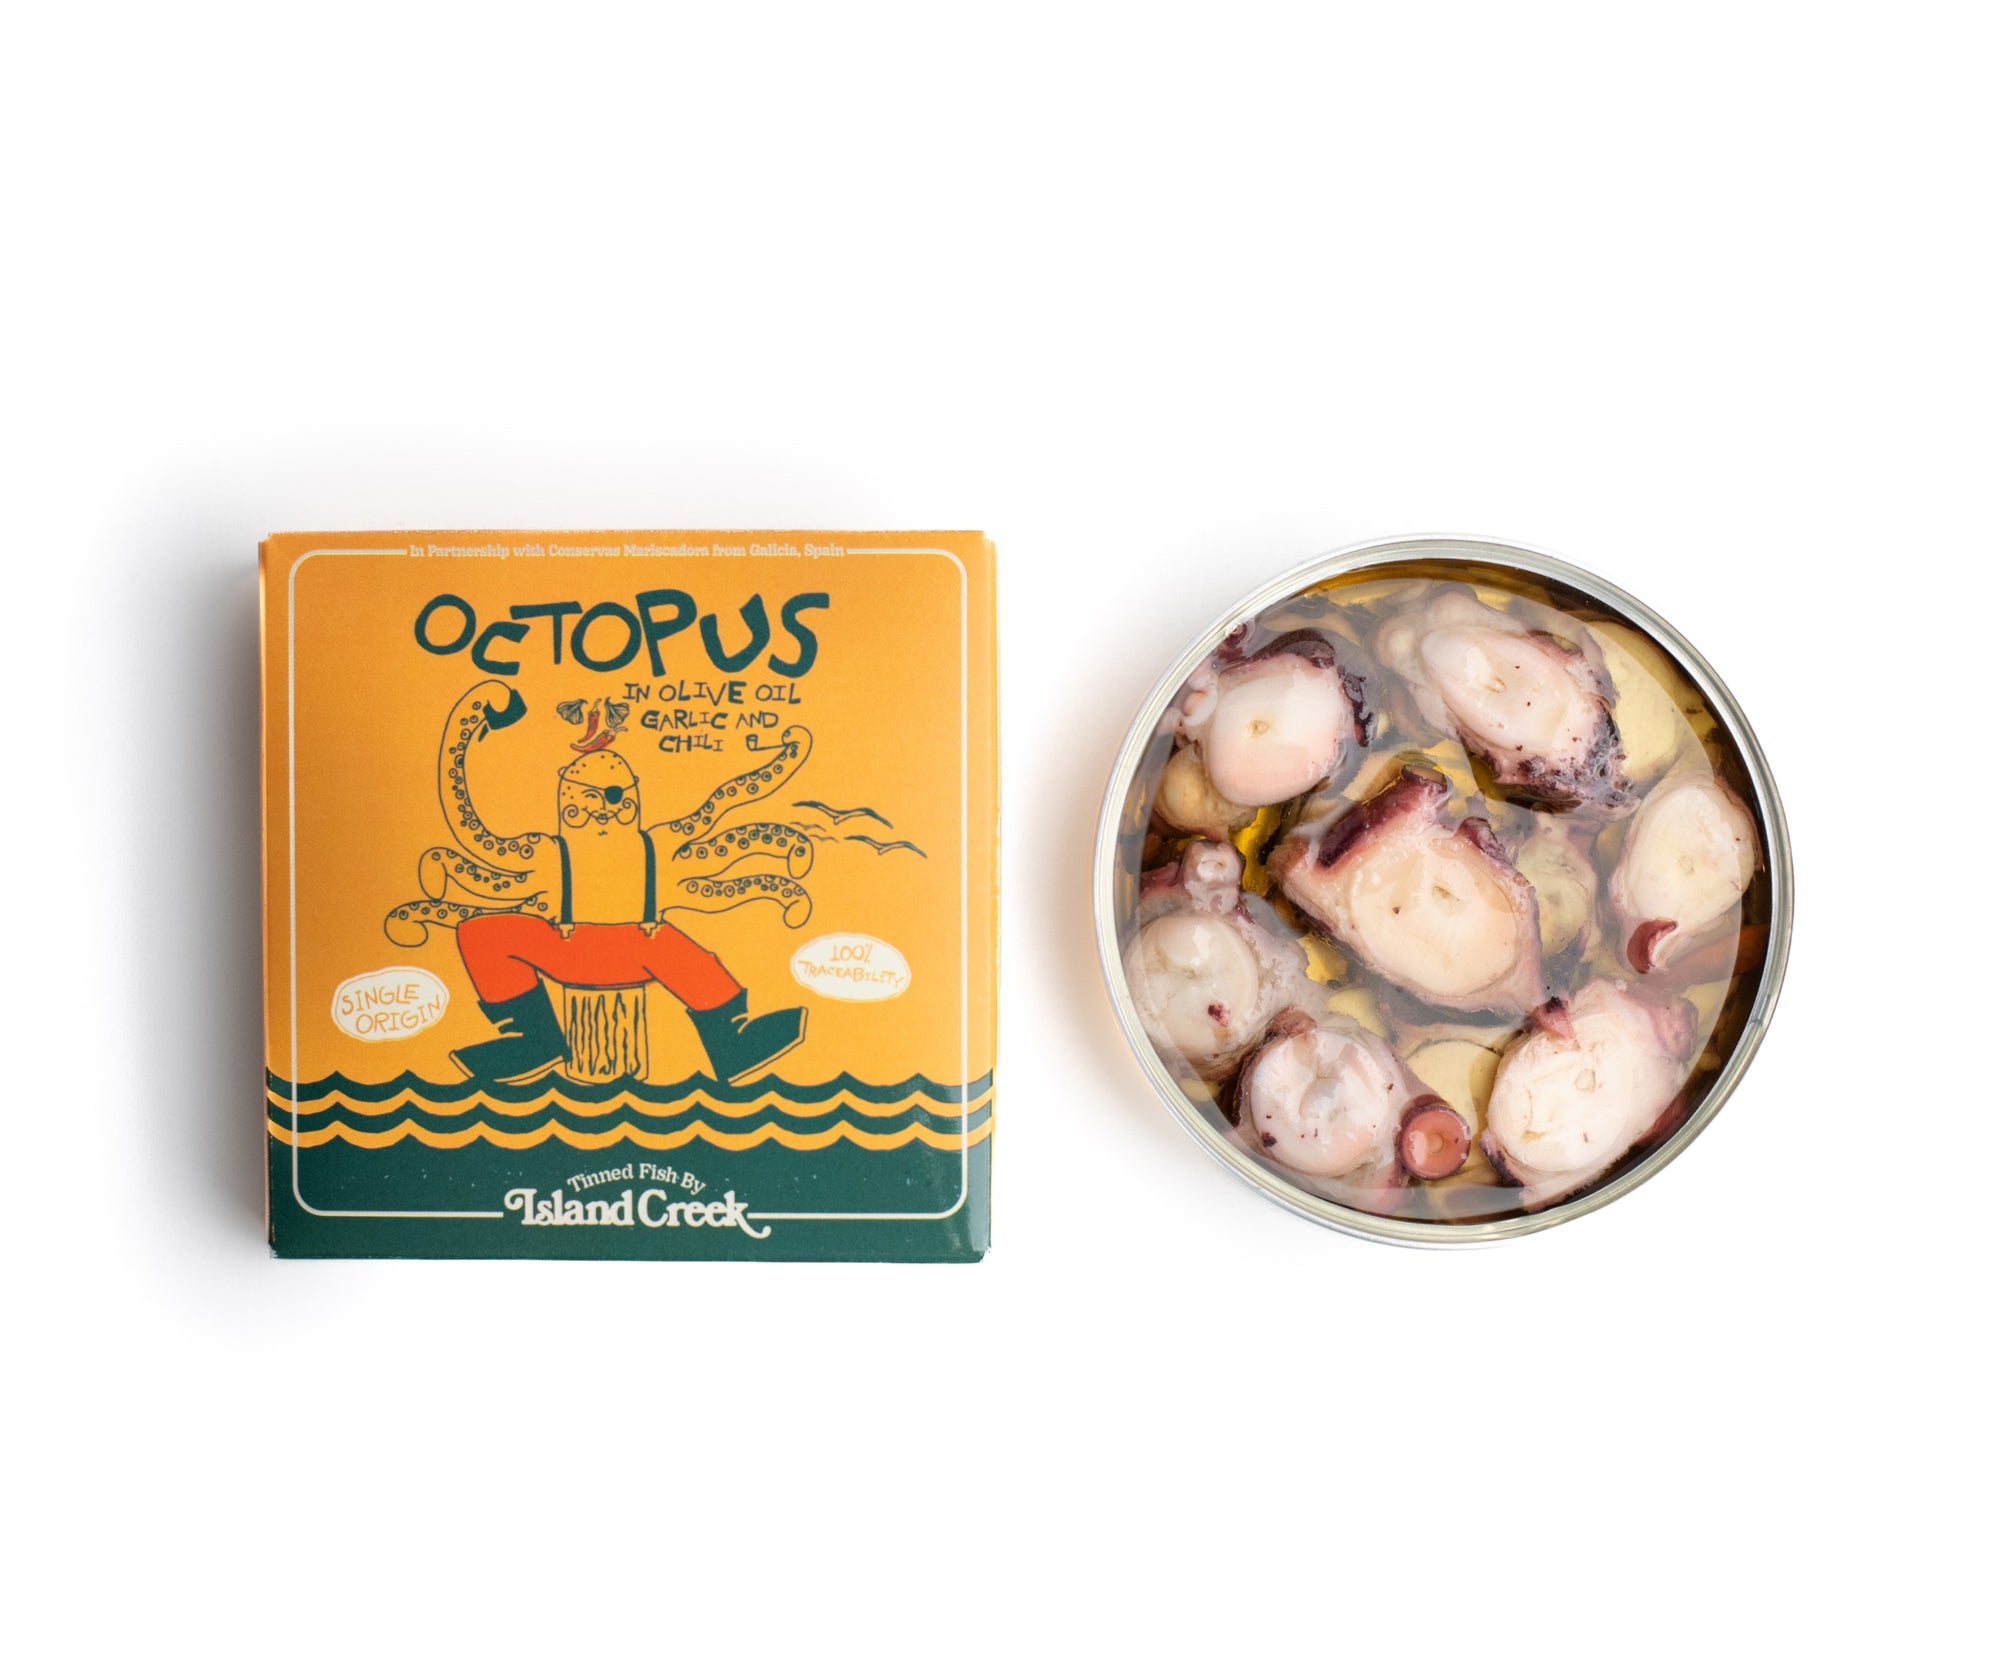 Island Creek x Mariscadora Octopus in Oil, Garlic & Chili *BUY 4 PACK & SAVE 20%*